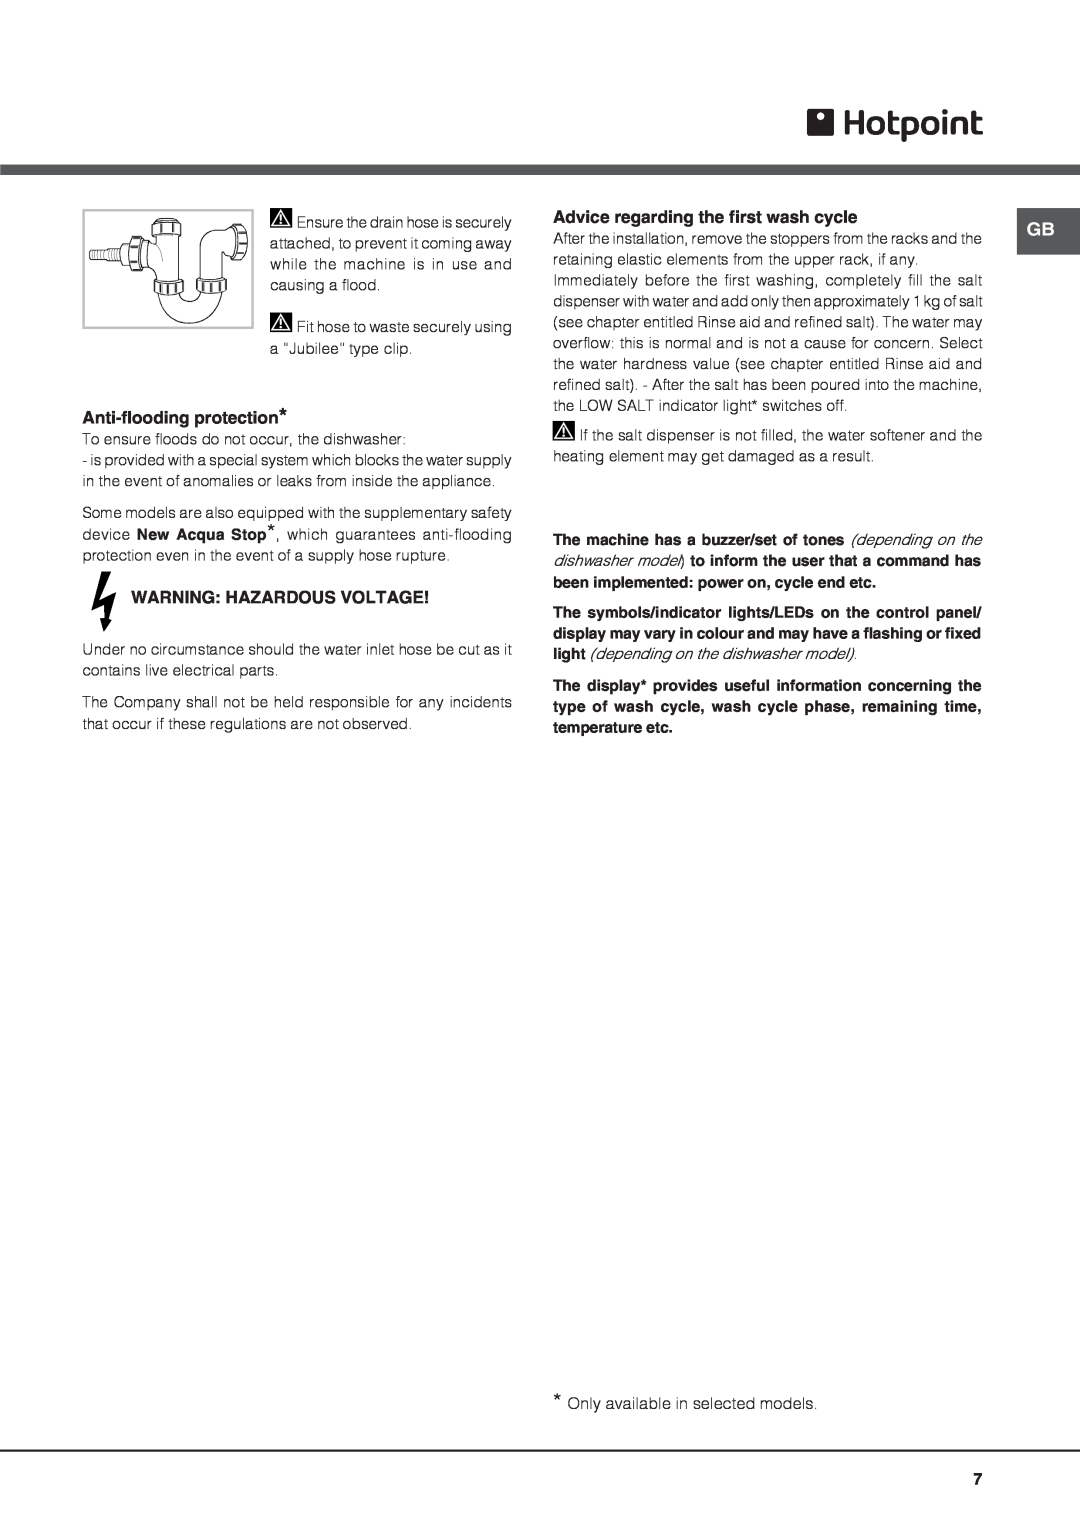 Hotpoint FDYB 11011, FDYB 10011 Anti-flooding protection, Warning Hazardous Voltage, Advice regarding the first wash cycle 